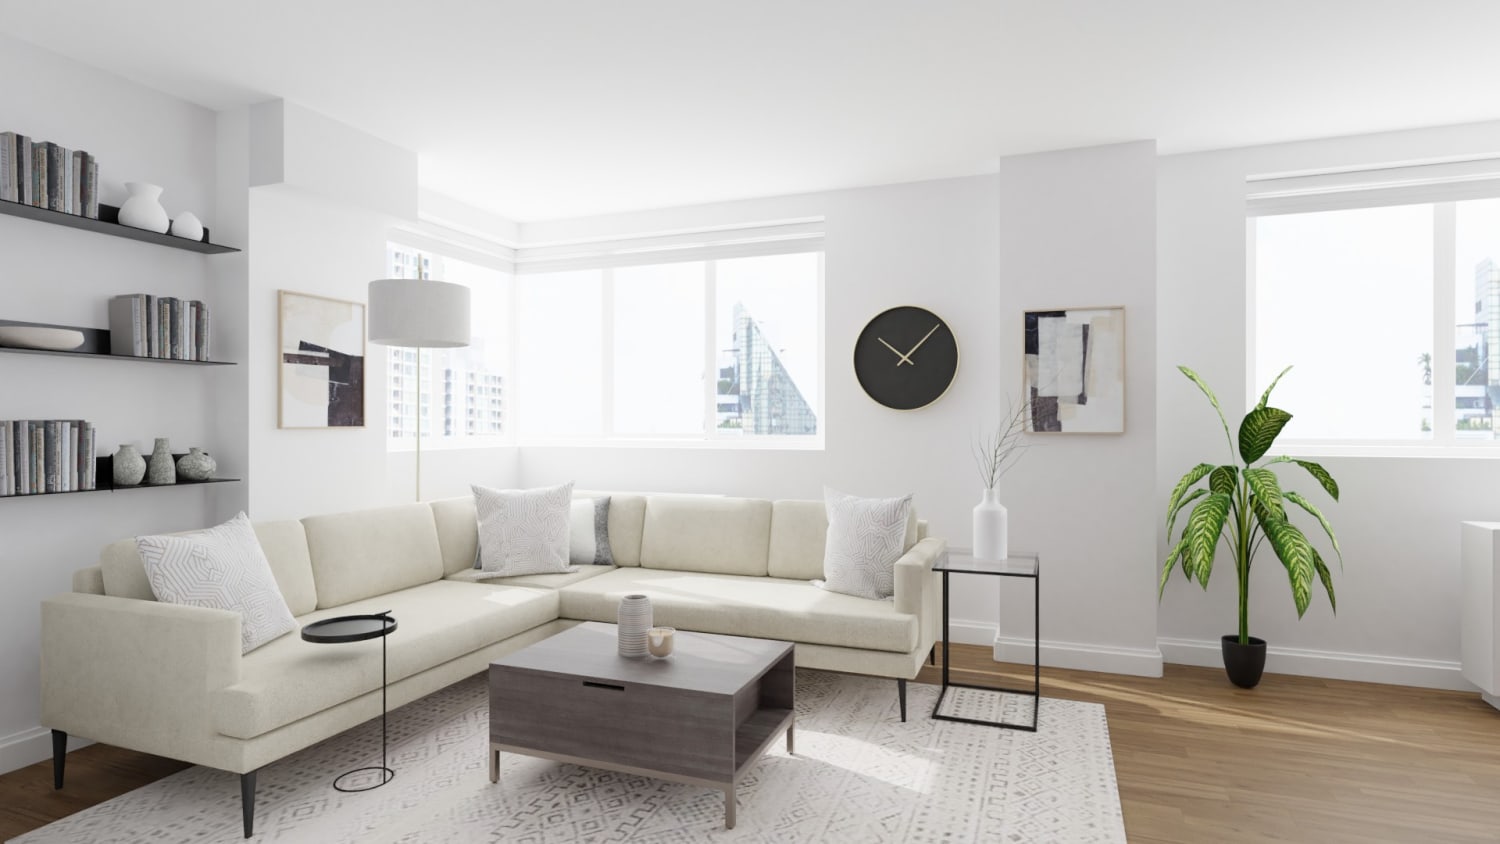 Introduction to Minimalist Home Interior Design - Visual ID